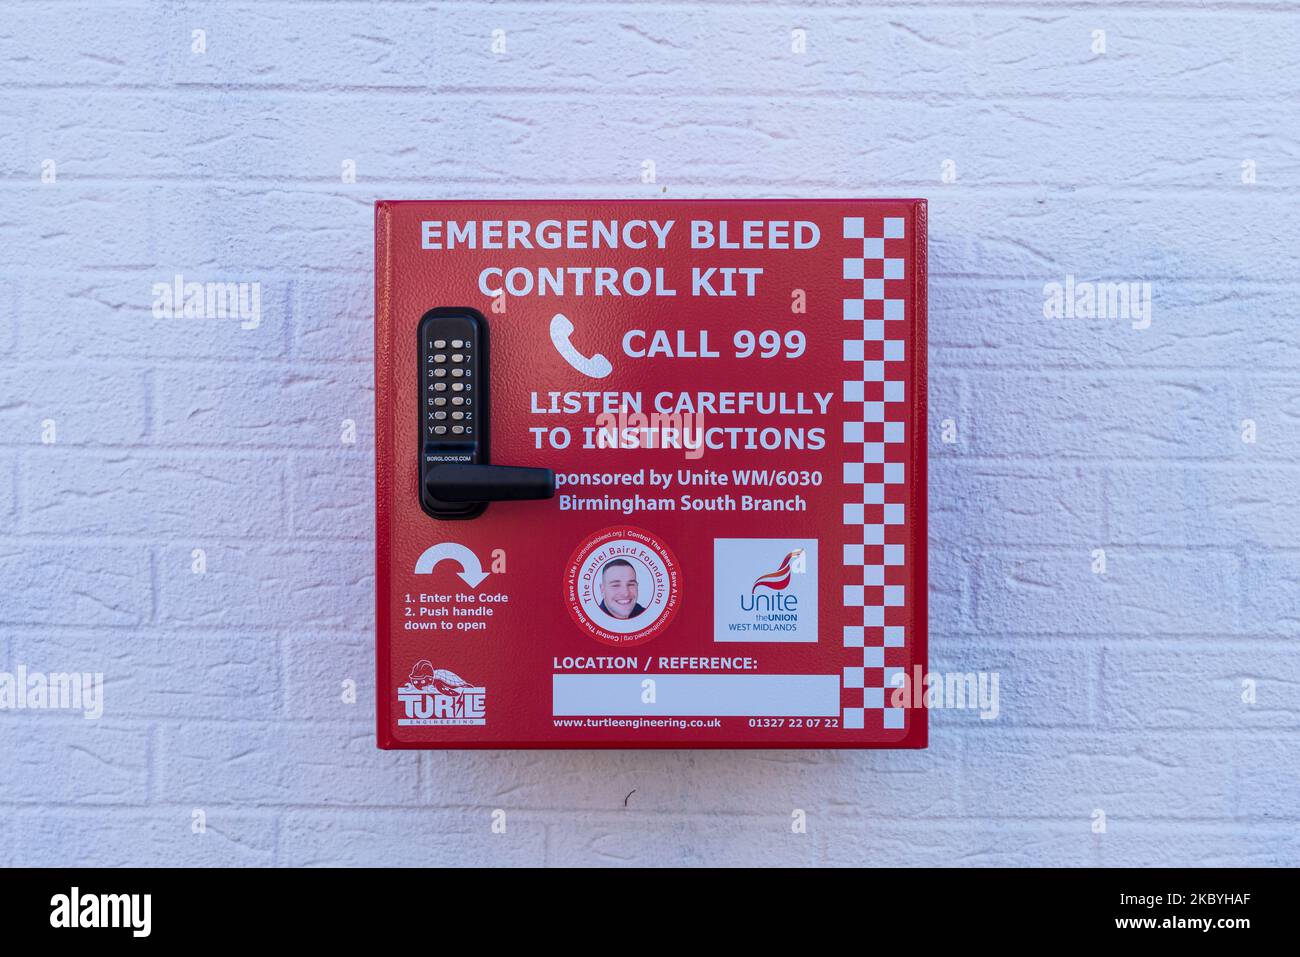 Emergency bleed control kit in red box mounted on a wall in Kings Heath High Street, Birmingham Stock Photo